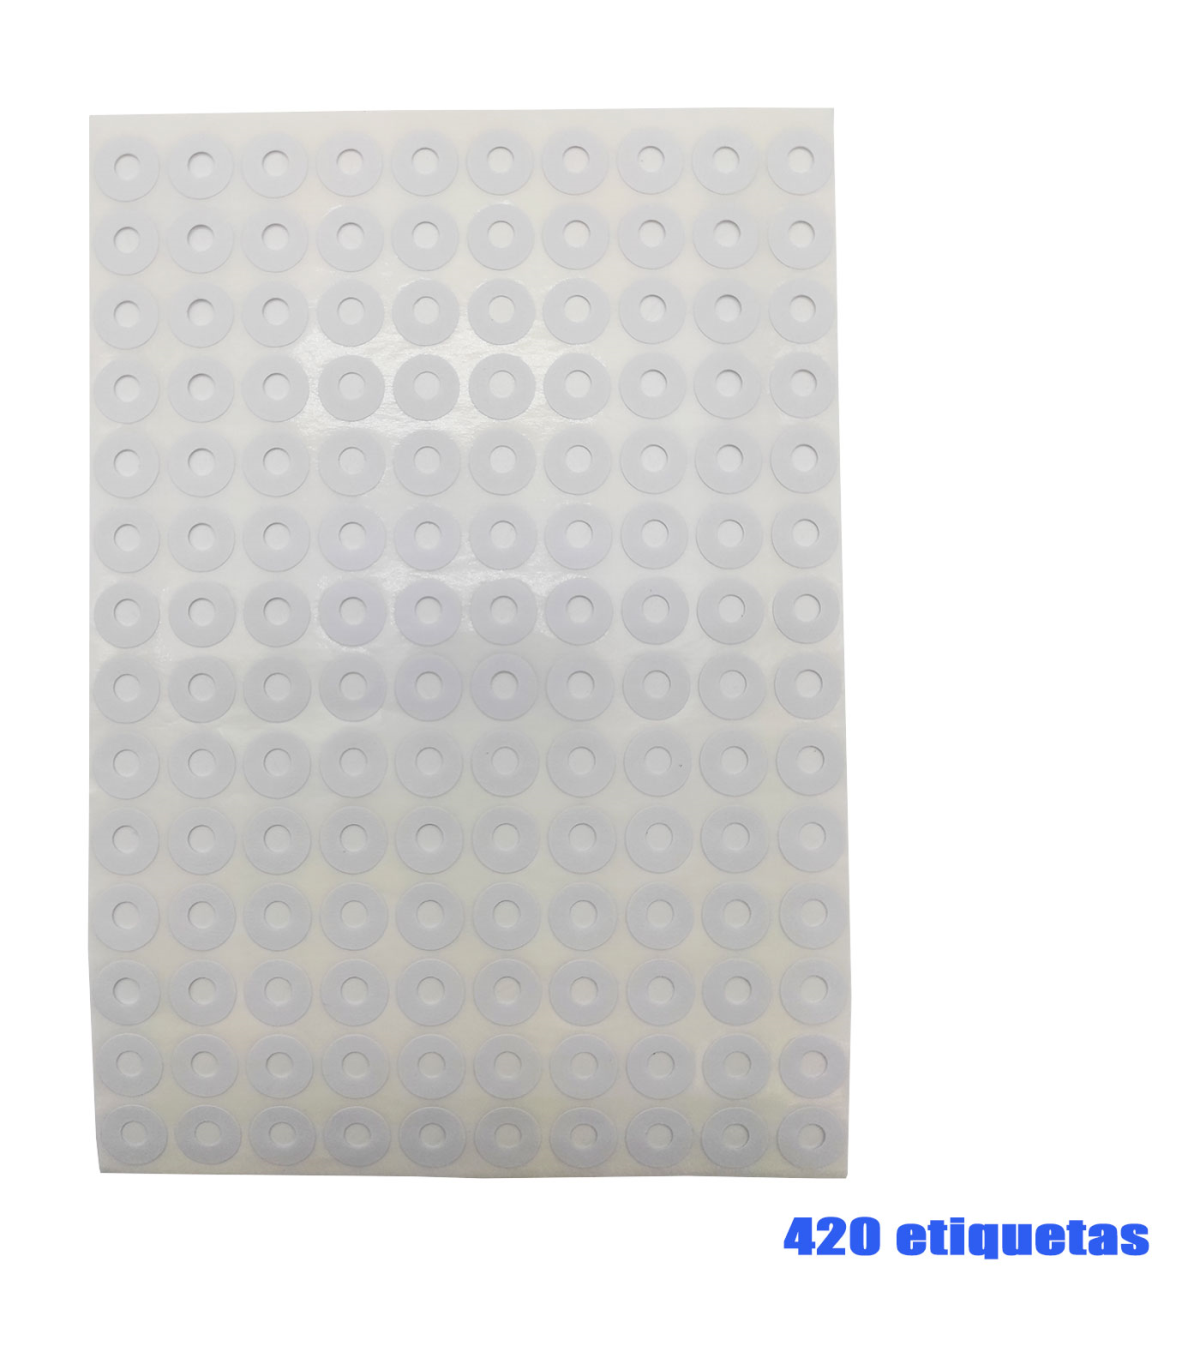 Tradineur - Pack de etiquetas adhesivas redondas blancas E16C, pegatinas auto-adhesivas para objetos, hogar, oficina, Ø13